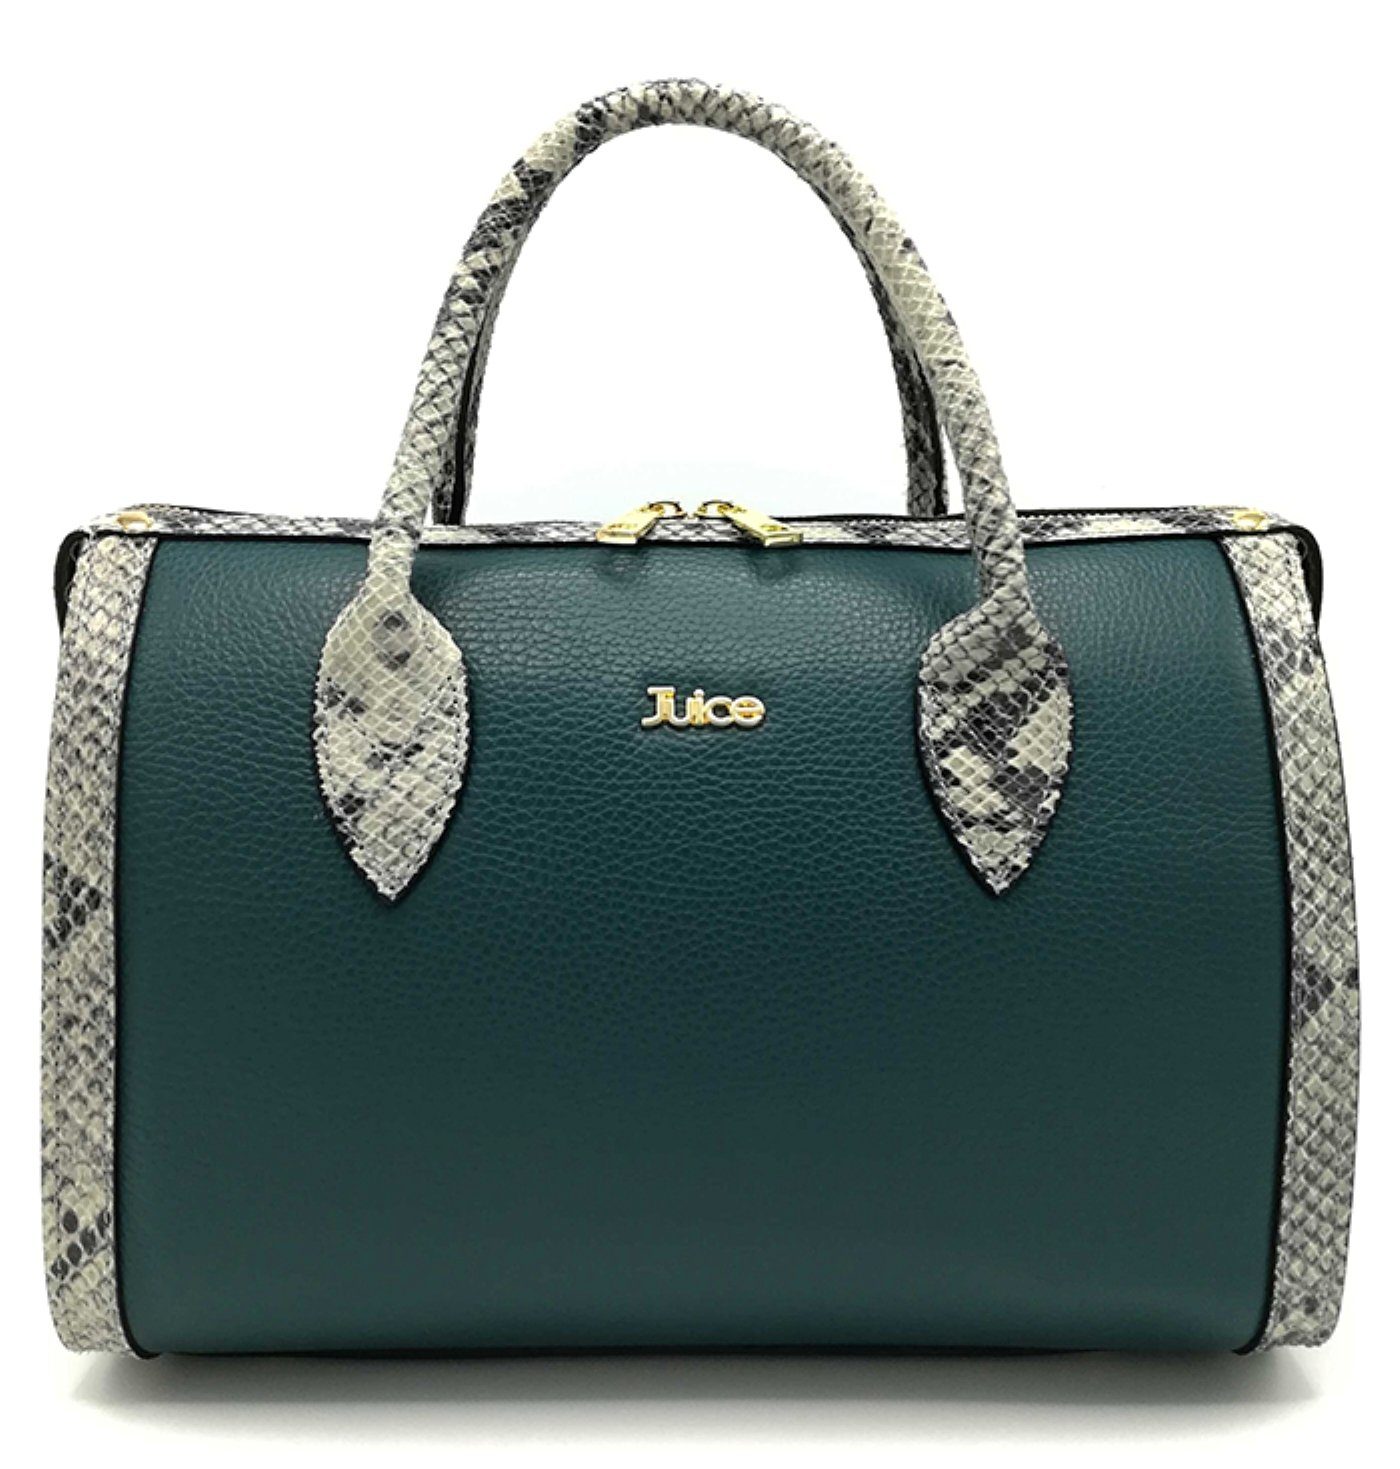 Ava & Jackson Company Handtasche VIVIANA, echtes Leder made in Italy grün-beige